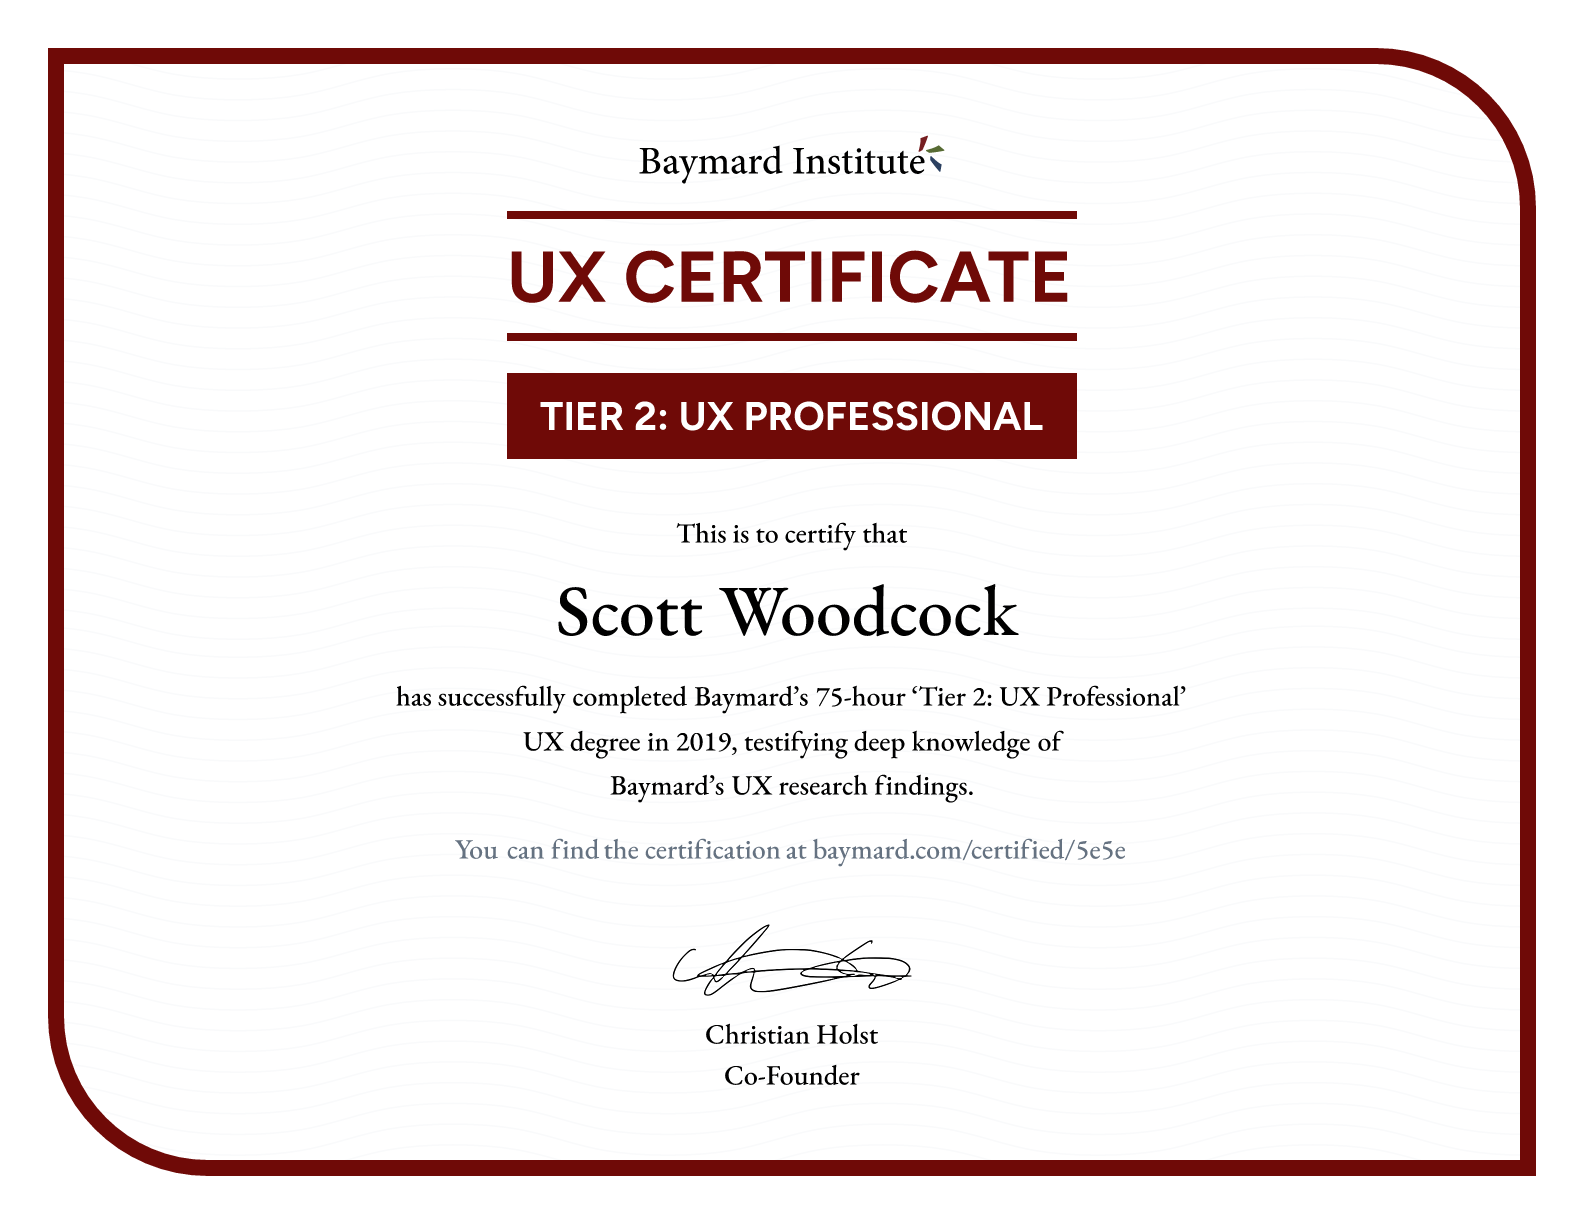 Scott Woodcock’s certificate